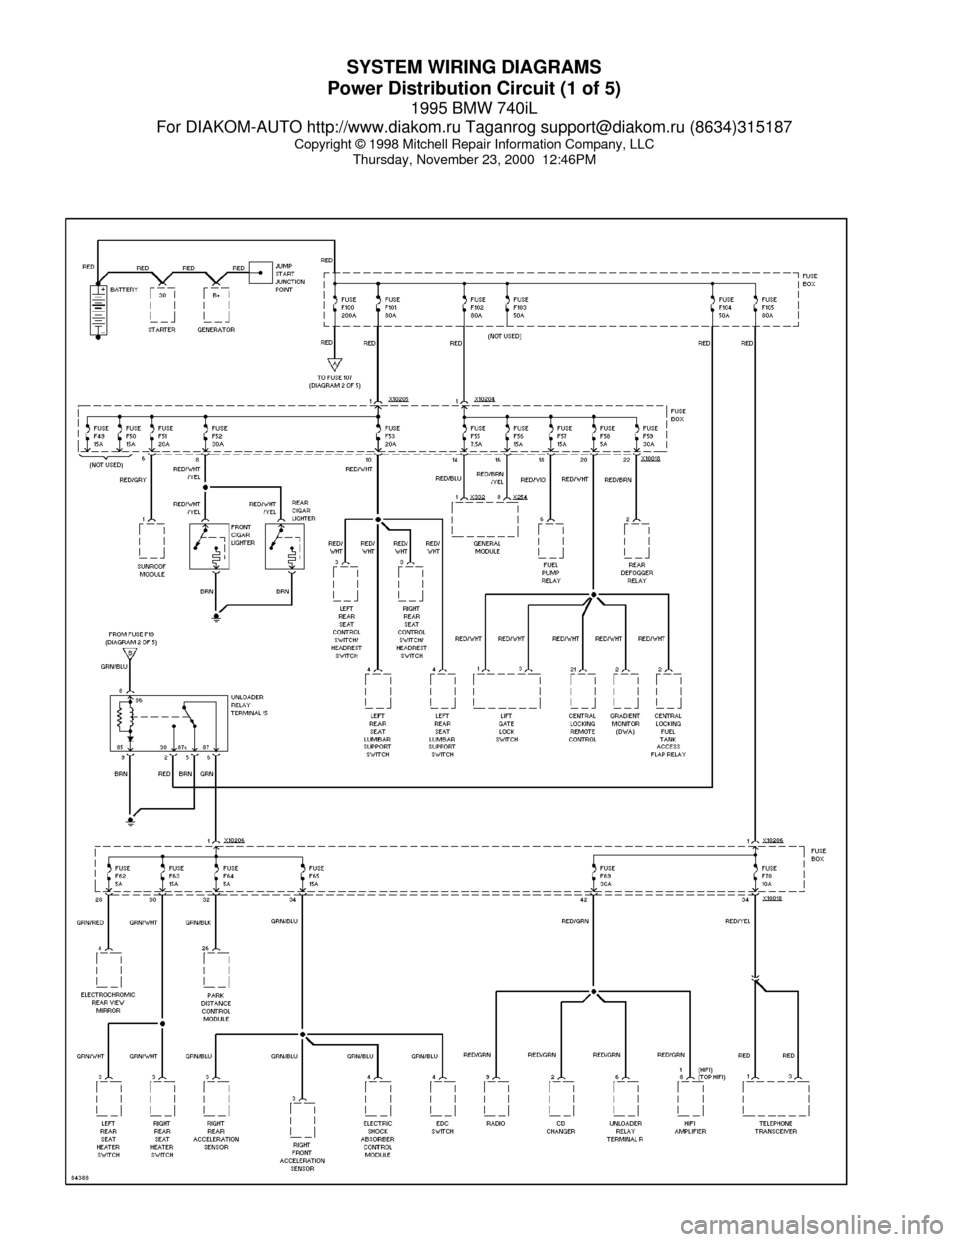 BMW 740il 1995 E38 System Wiring Diagrams SYSTEM WIRING DIAGRAMS
Power Distribution Circuit (1 of 5)
1995 BMW 740iL
For DIAKOM-AUTO http://www.diakom.ru Taganrog support@diakom.ru (8634)315187
Copyright © 1998 Mitchell Repair Information Com